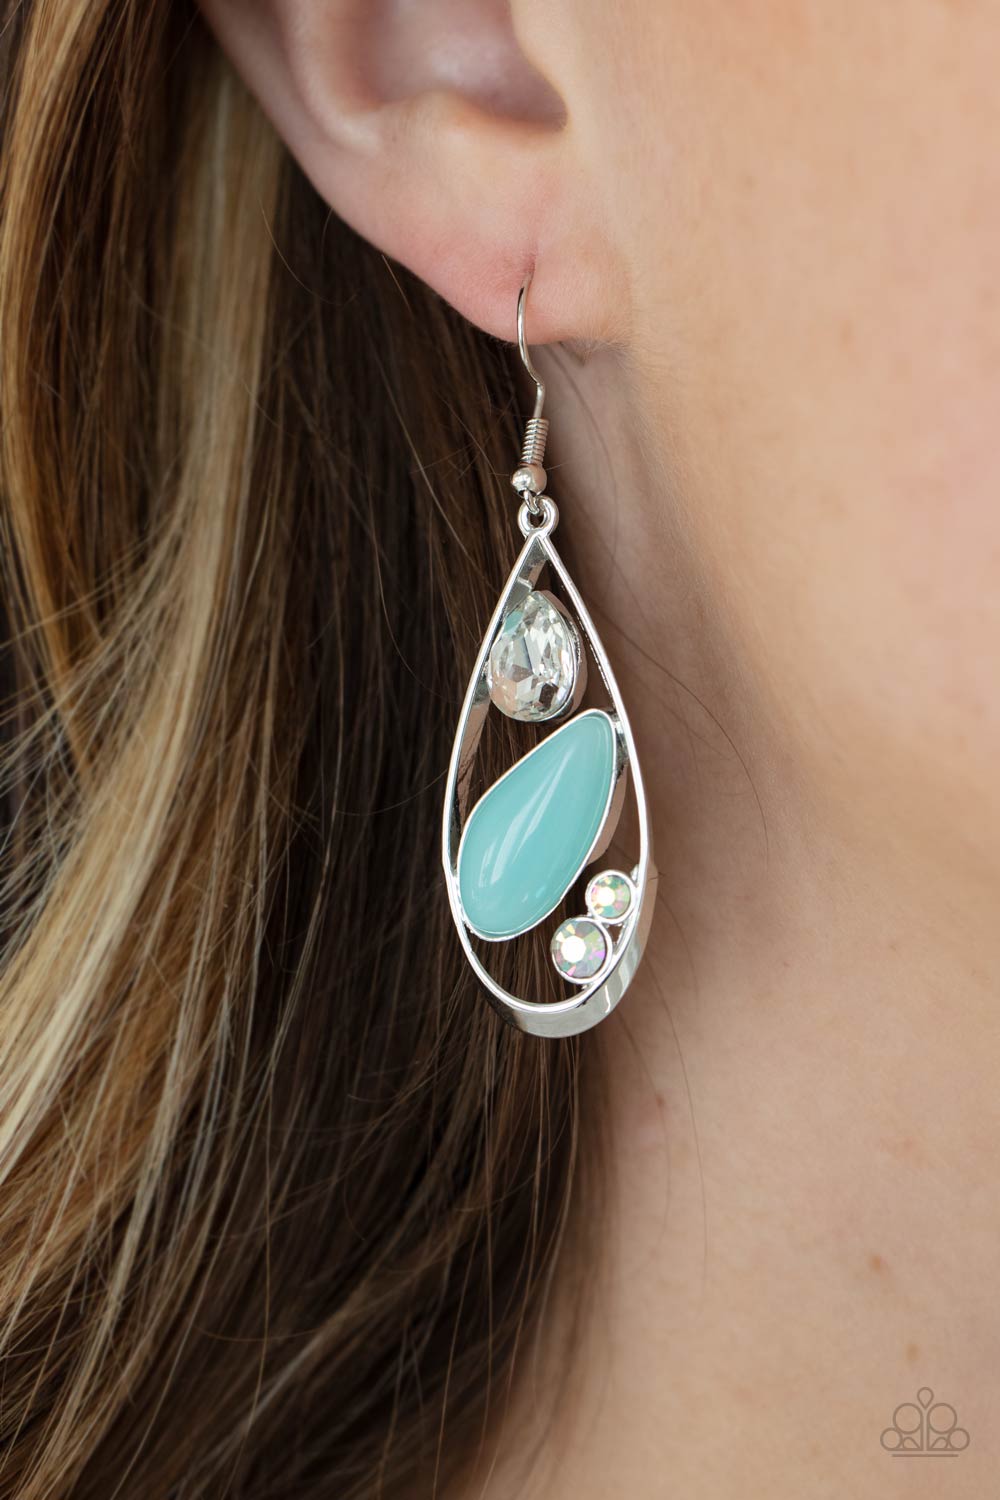 Harmonious Harbors Blue and Iridescent Rhinestone Earrings - Paparazzi Accessories- model - CarasShop.com - $5 Jewelry by Cara Jewels